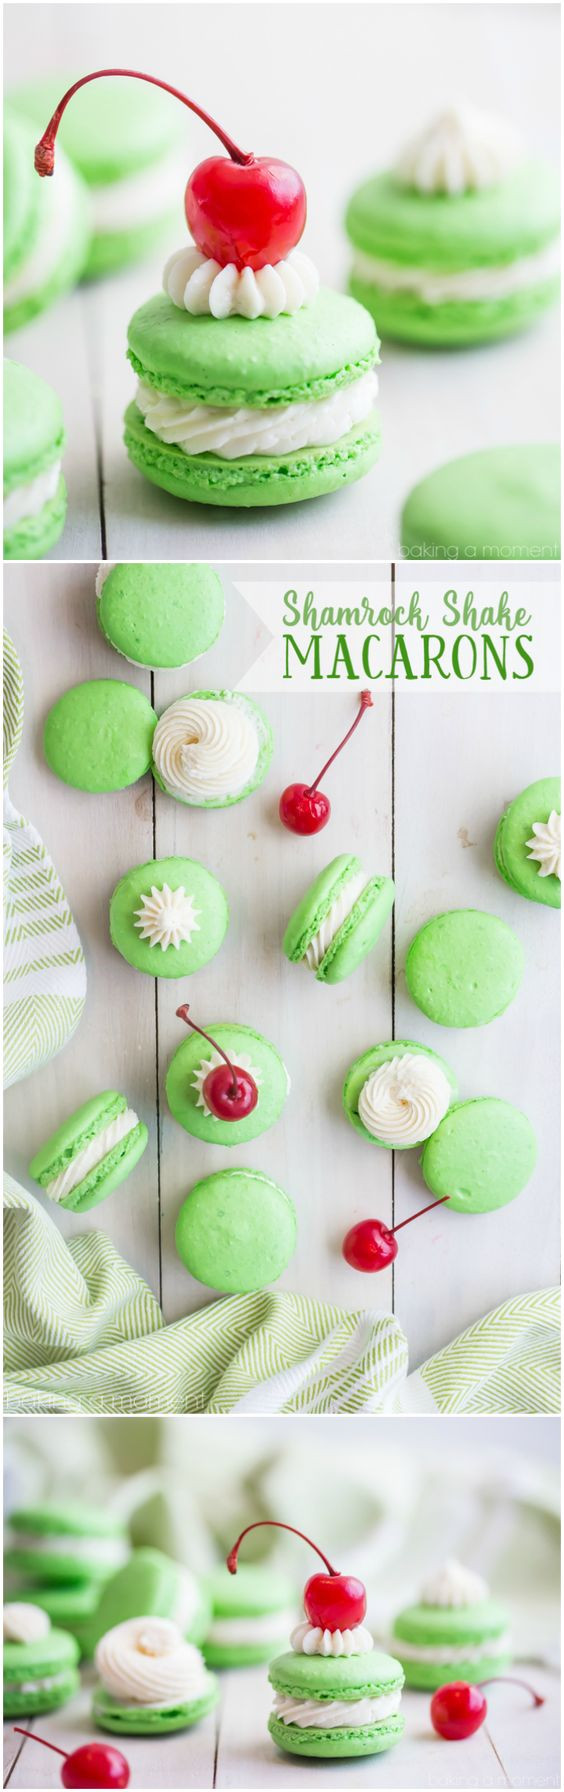 St Patrick'S Day Desserts Recipes Easy
 14 Popular Easy St Patrick’s Day Desserts and Treats